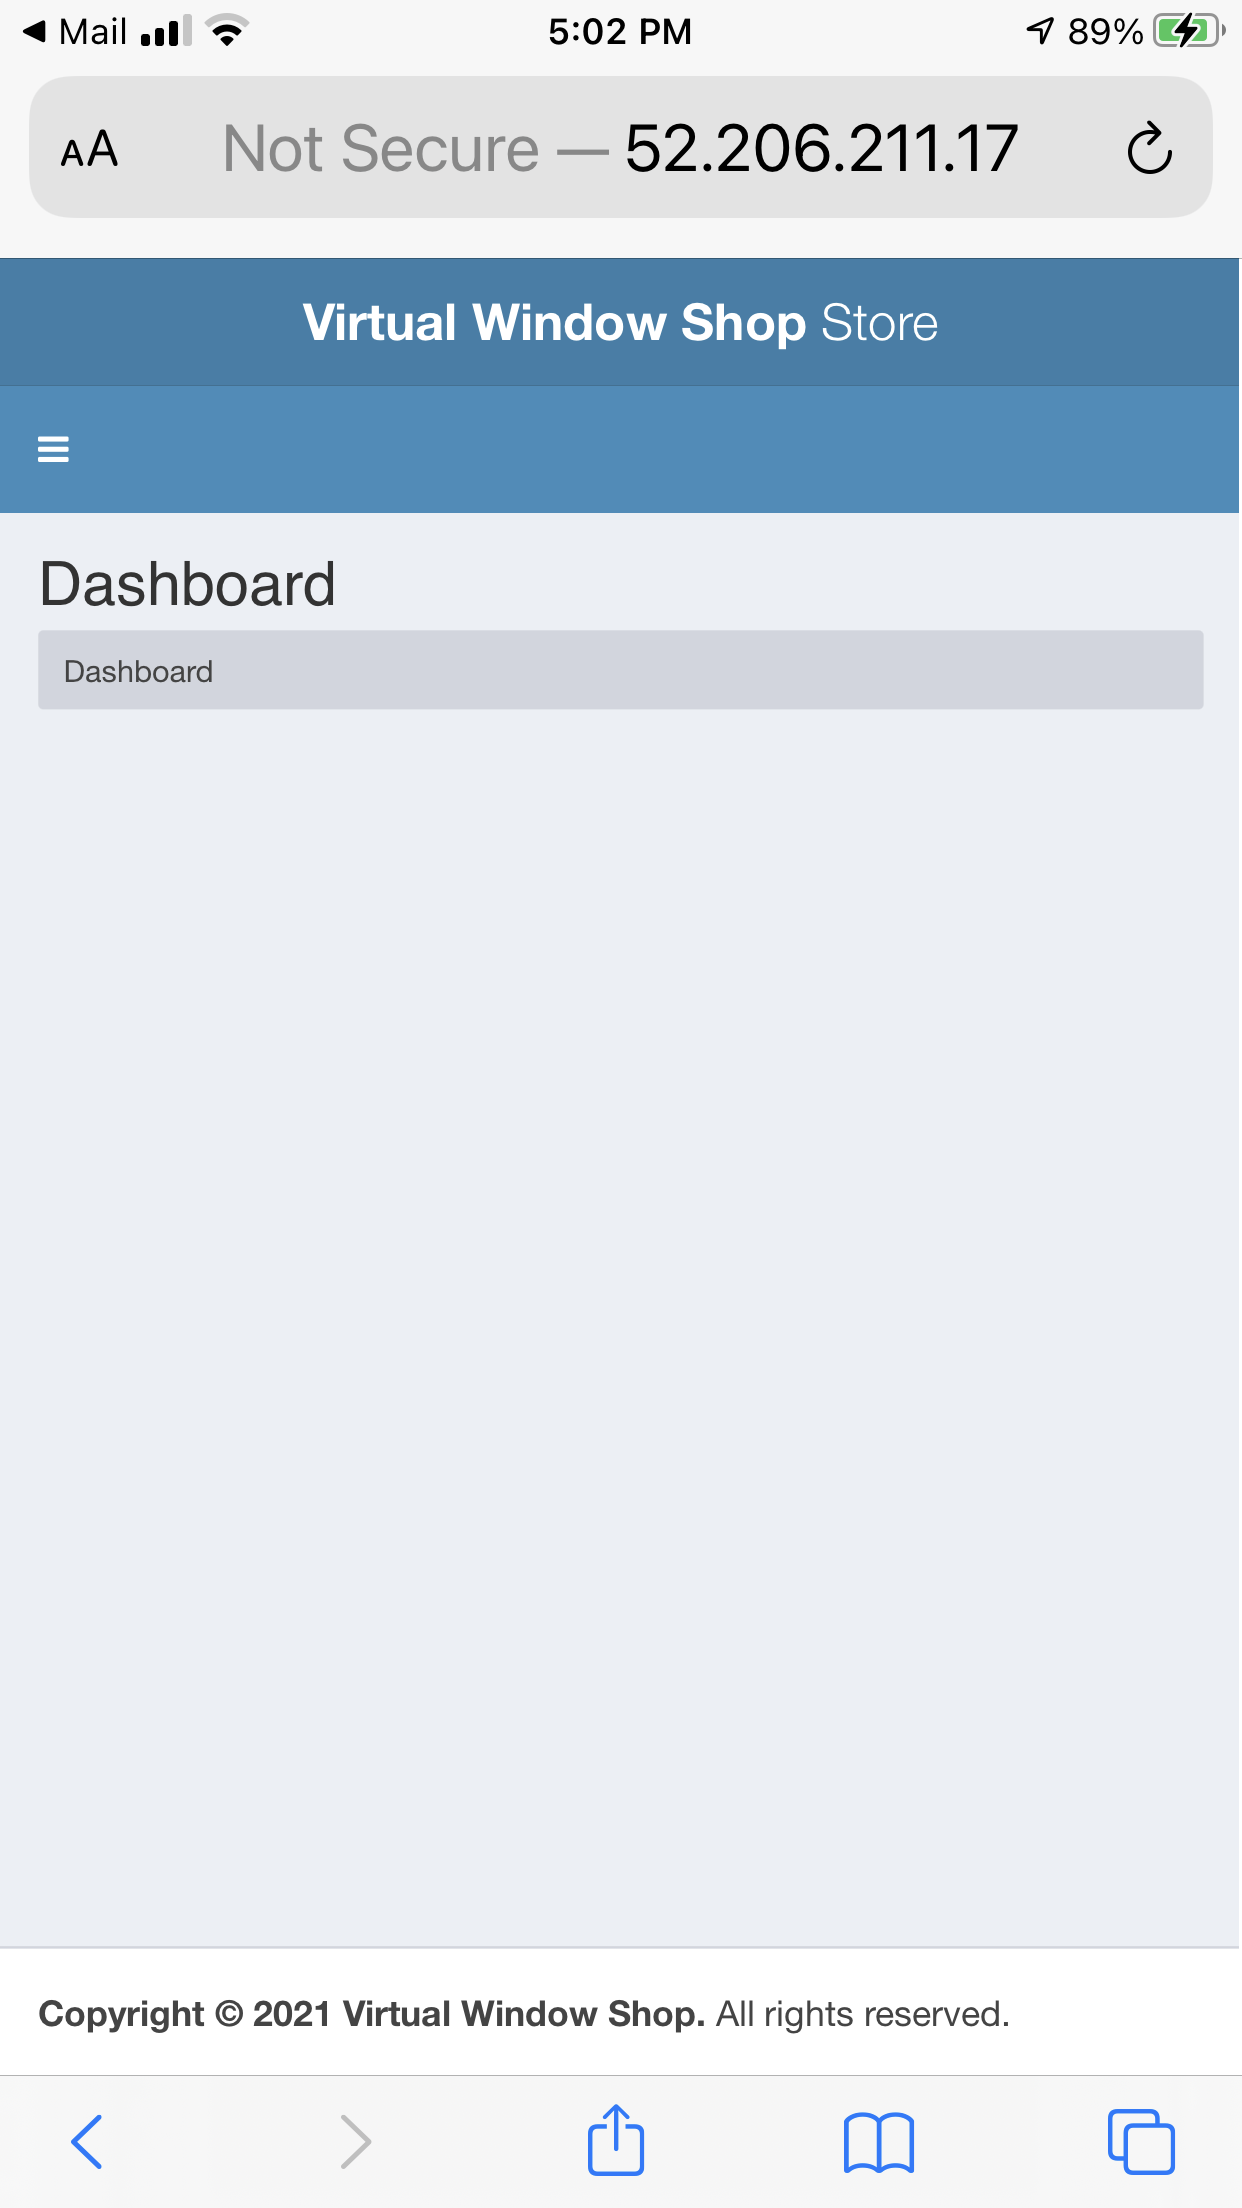 Vendor Dashboard main display for the Virtual Window Shop application